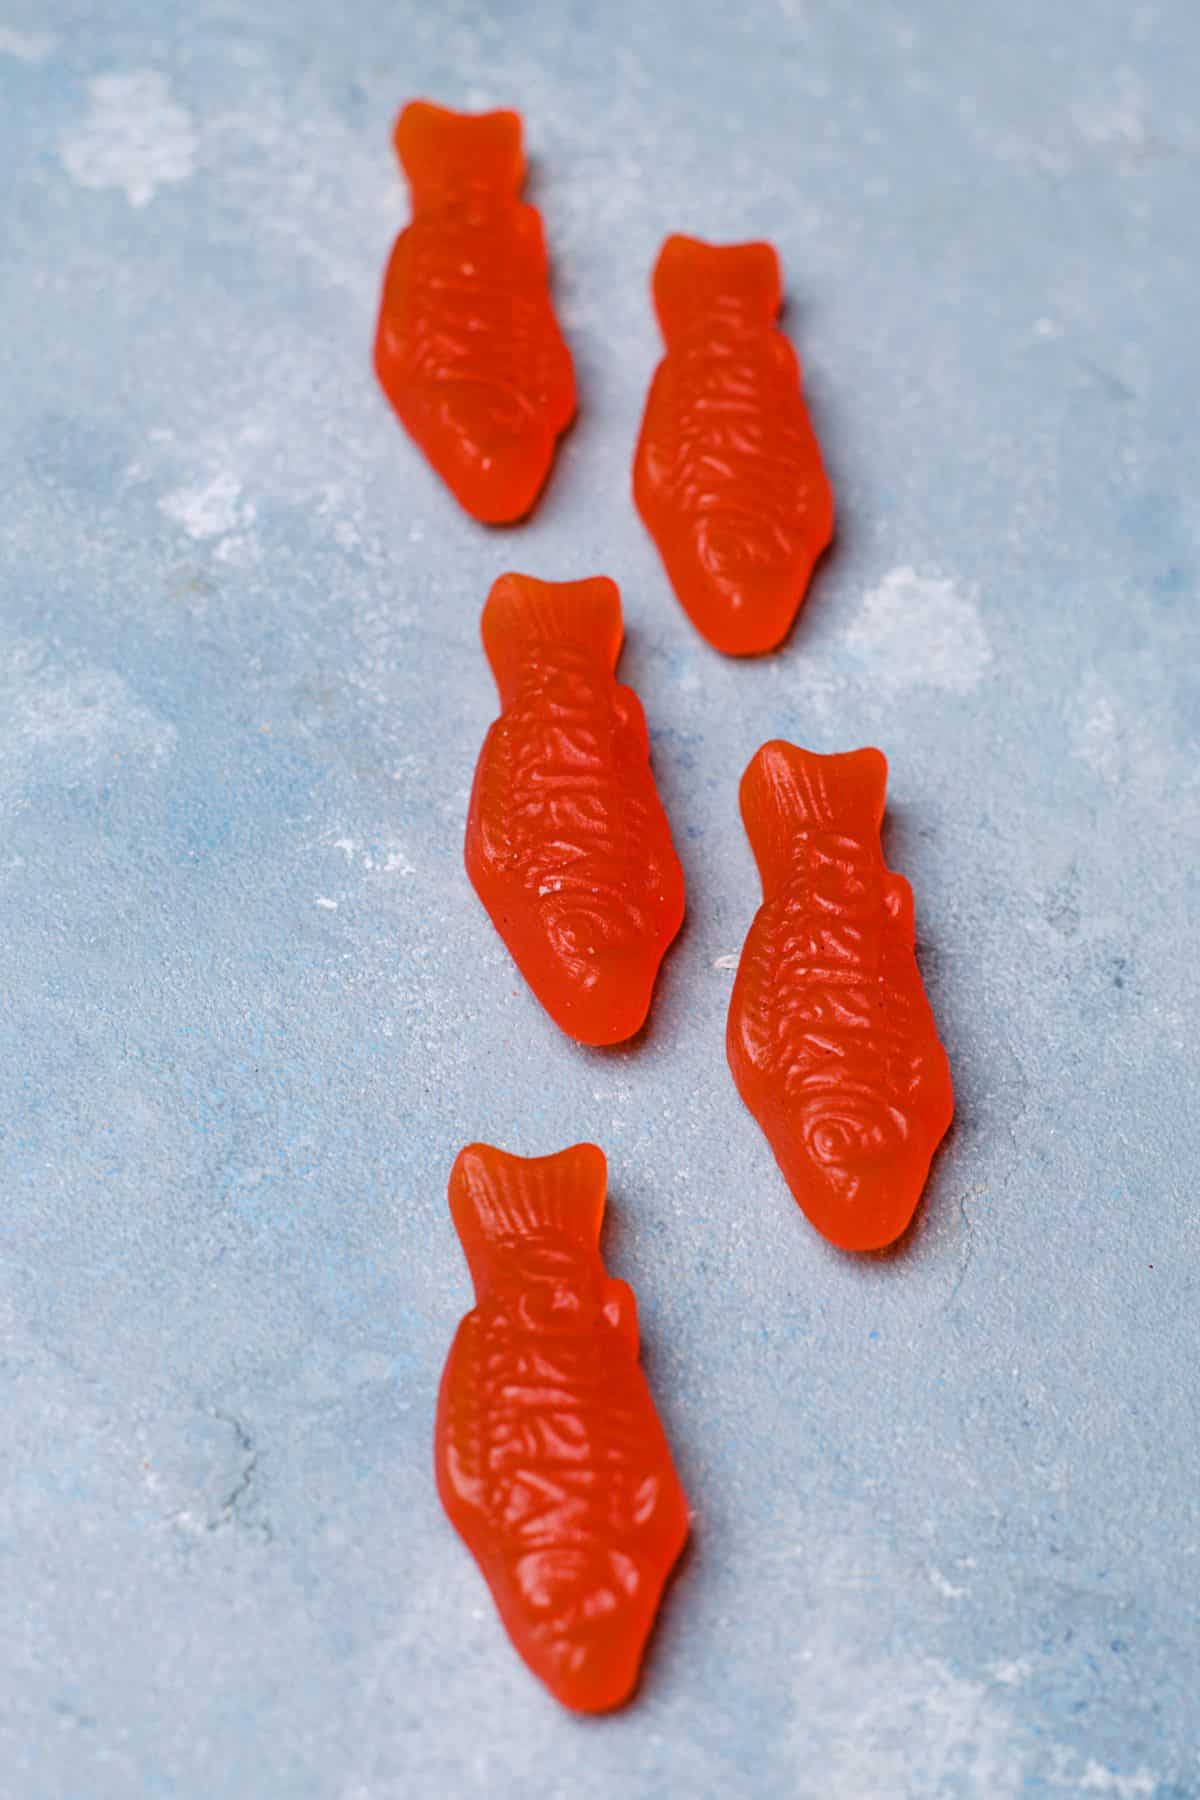 Red swedish fisch candies on closeup. 